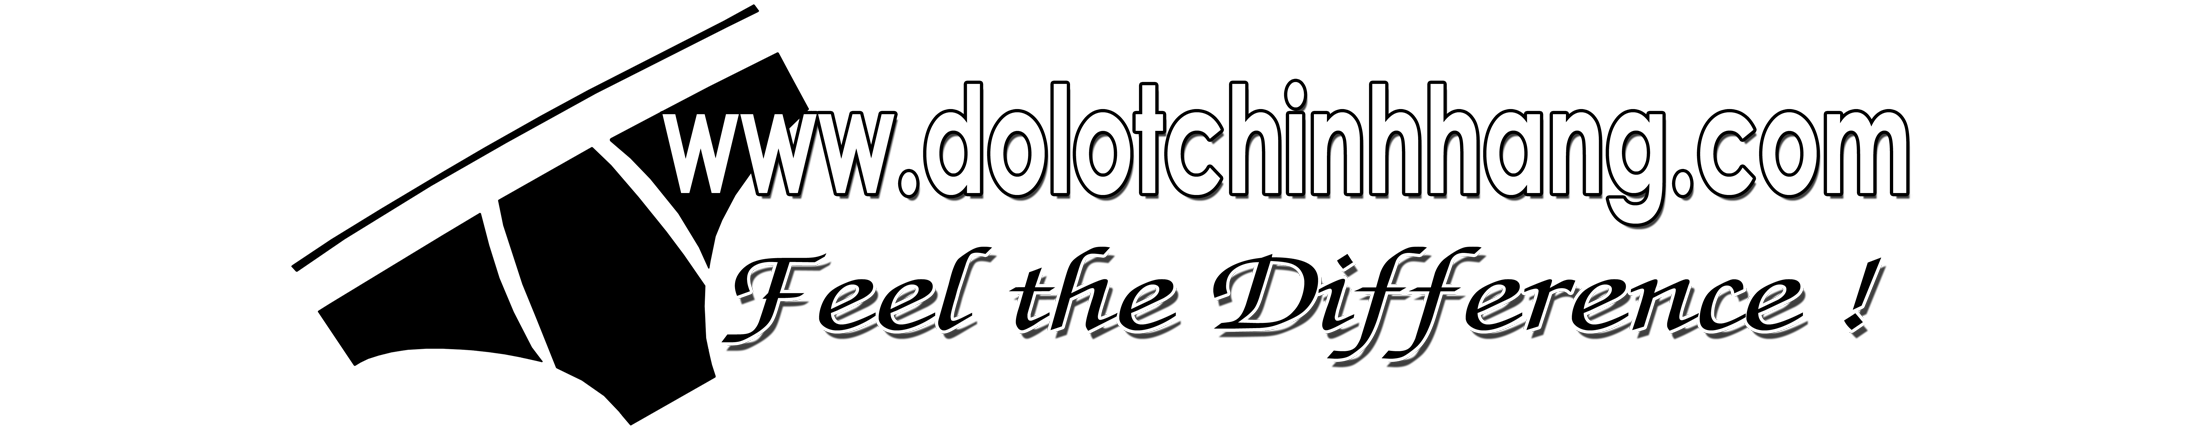 dolotchinhhang.com - lot4all.com